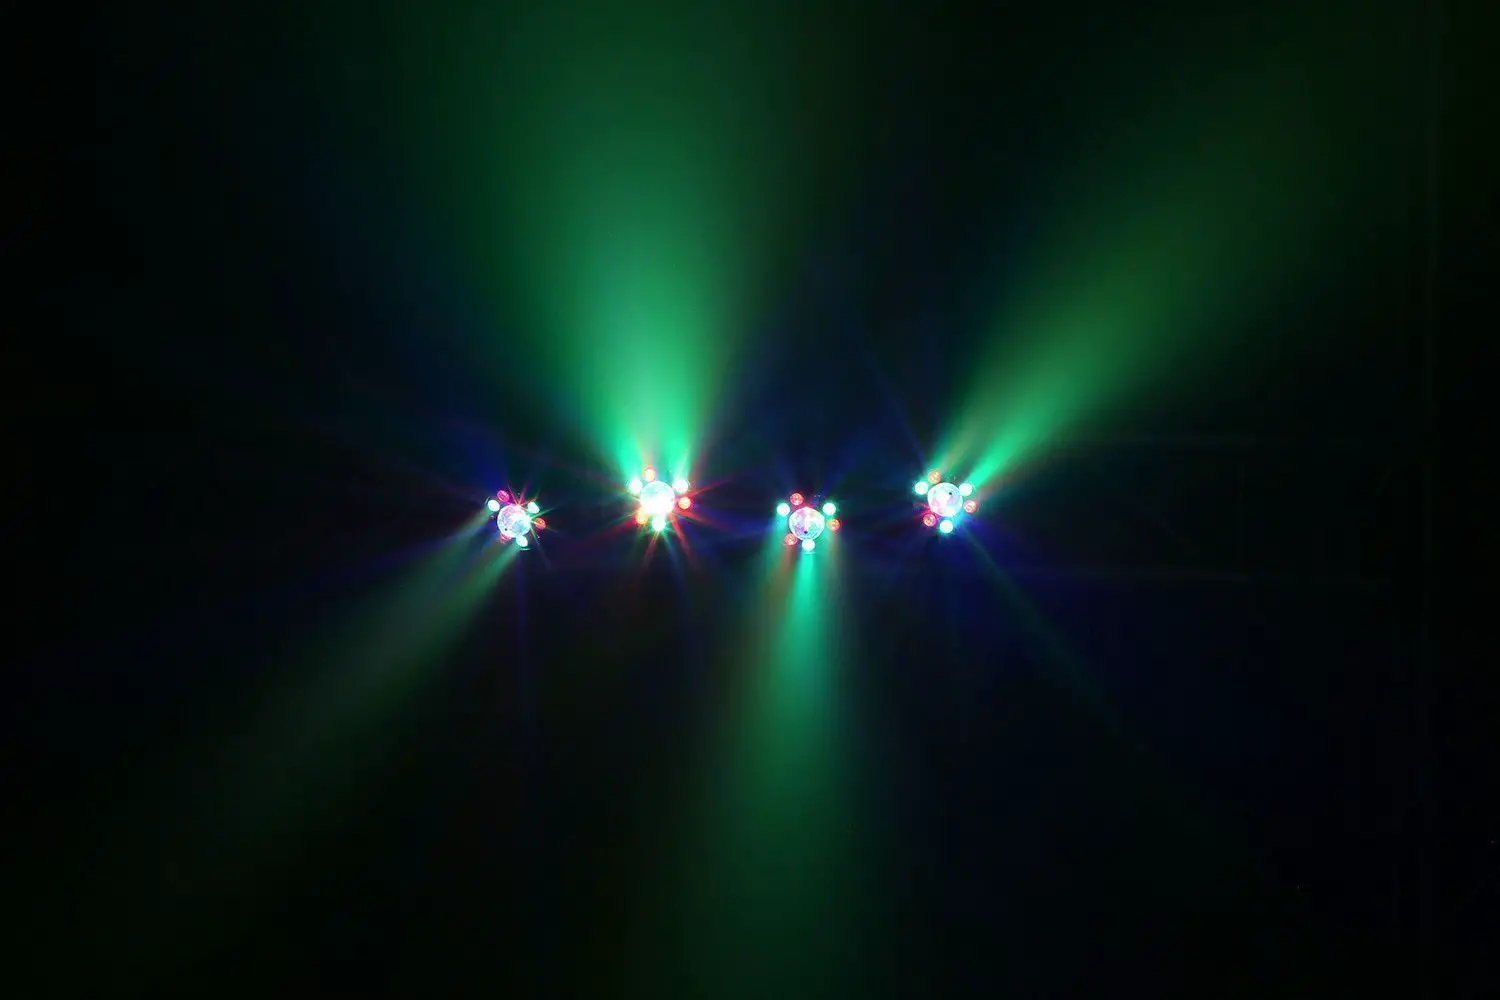 Beamz retourdeals led verlichting|retourdeals complete licht sets|led bar|led effecten|complete licht sets